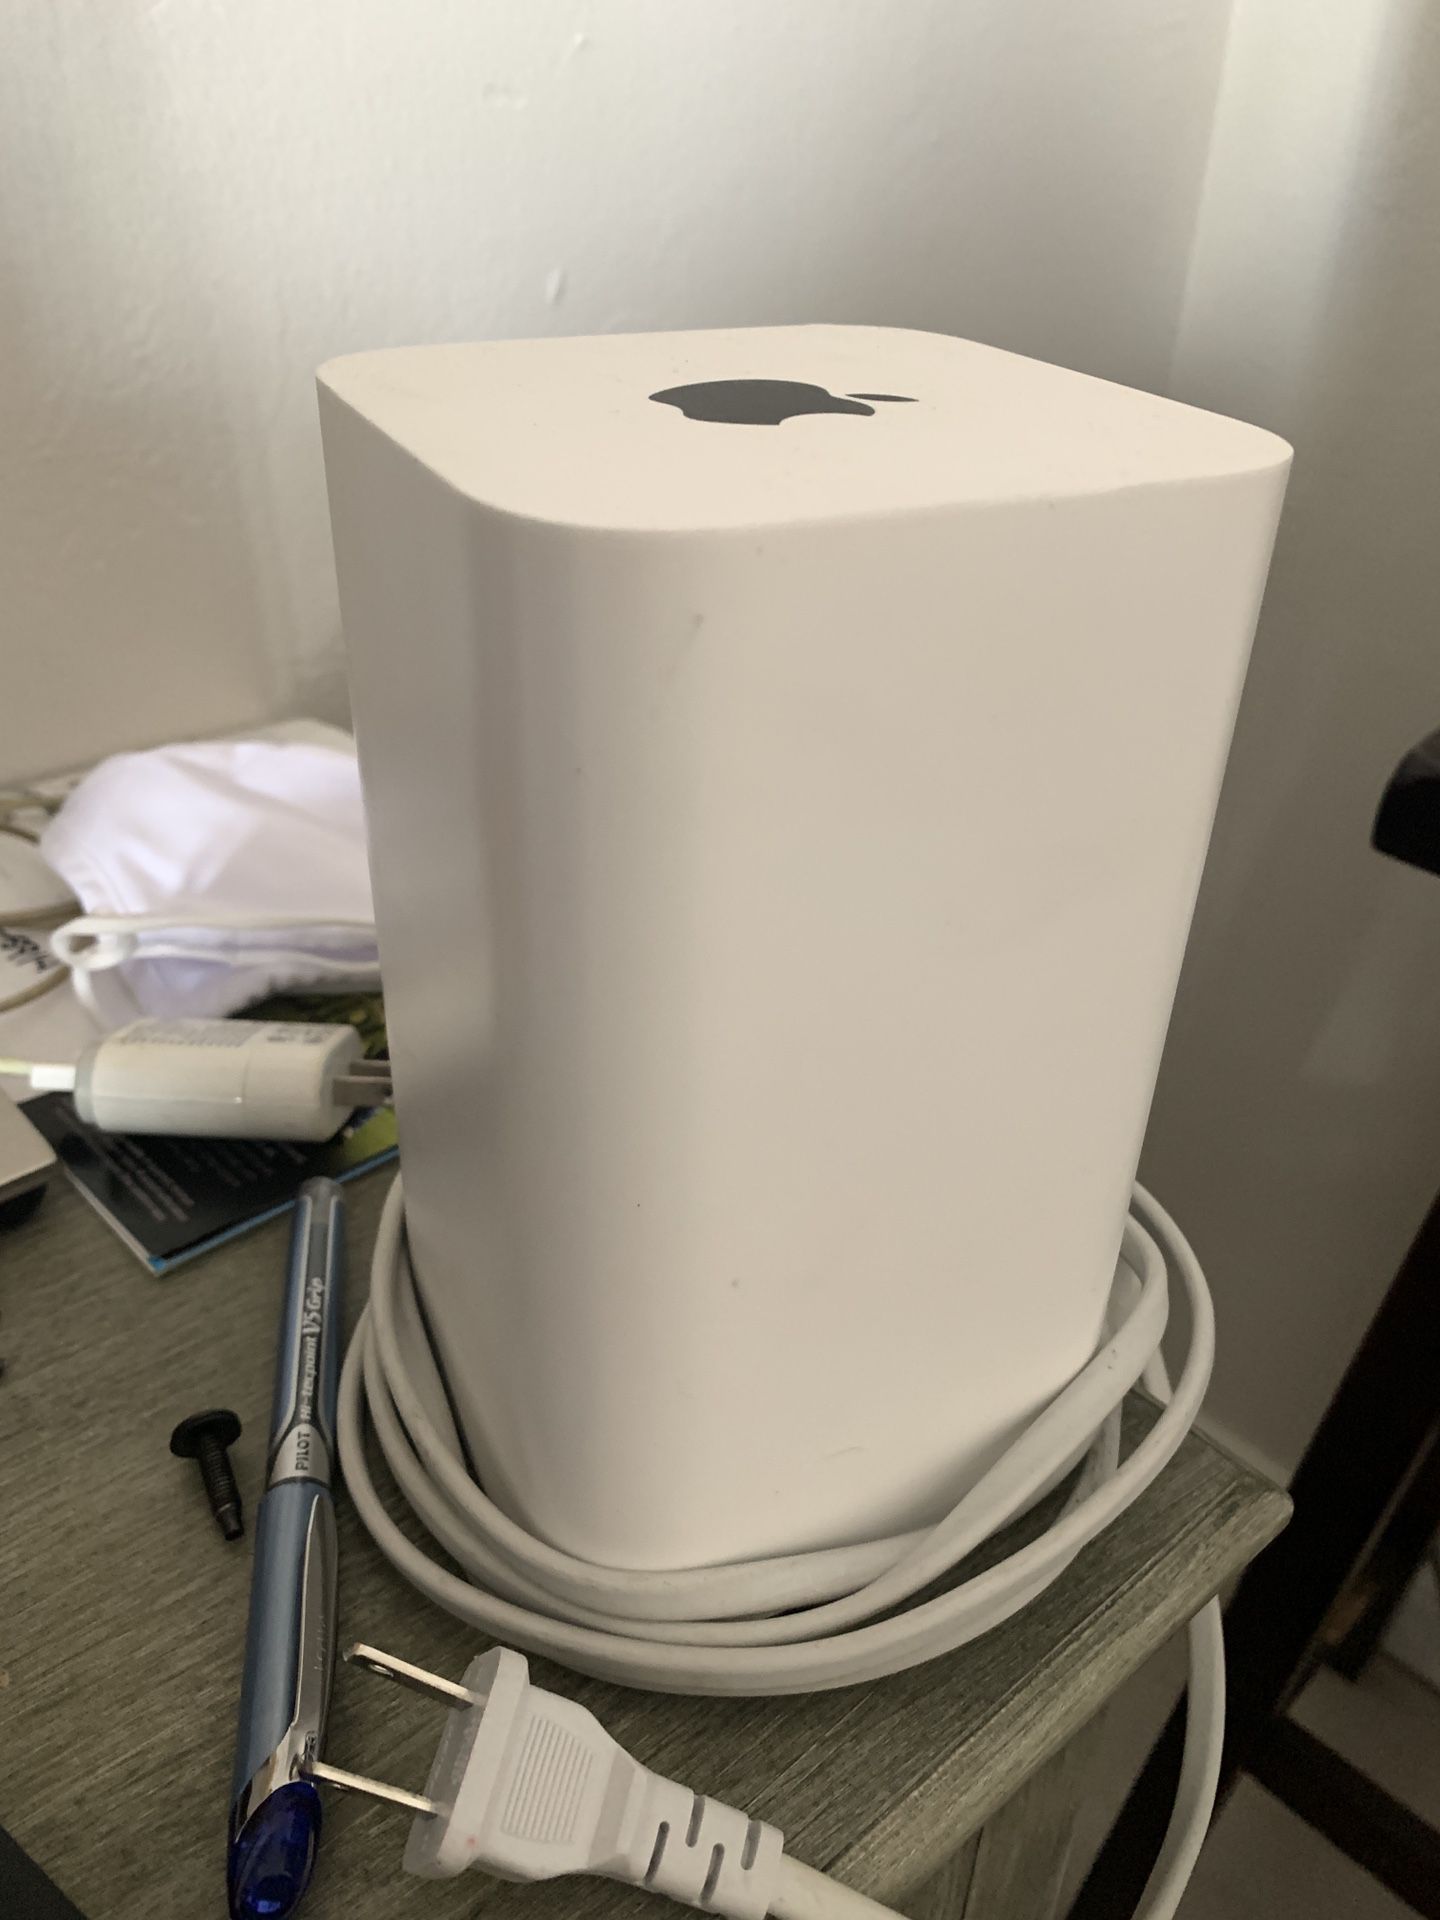 Apple airport extreme modem